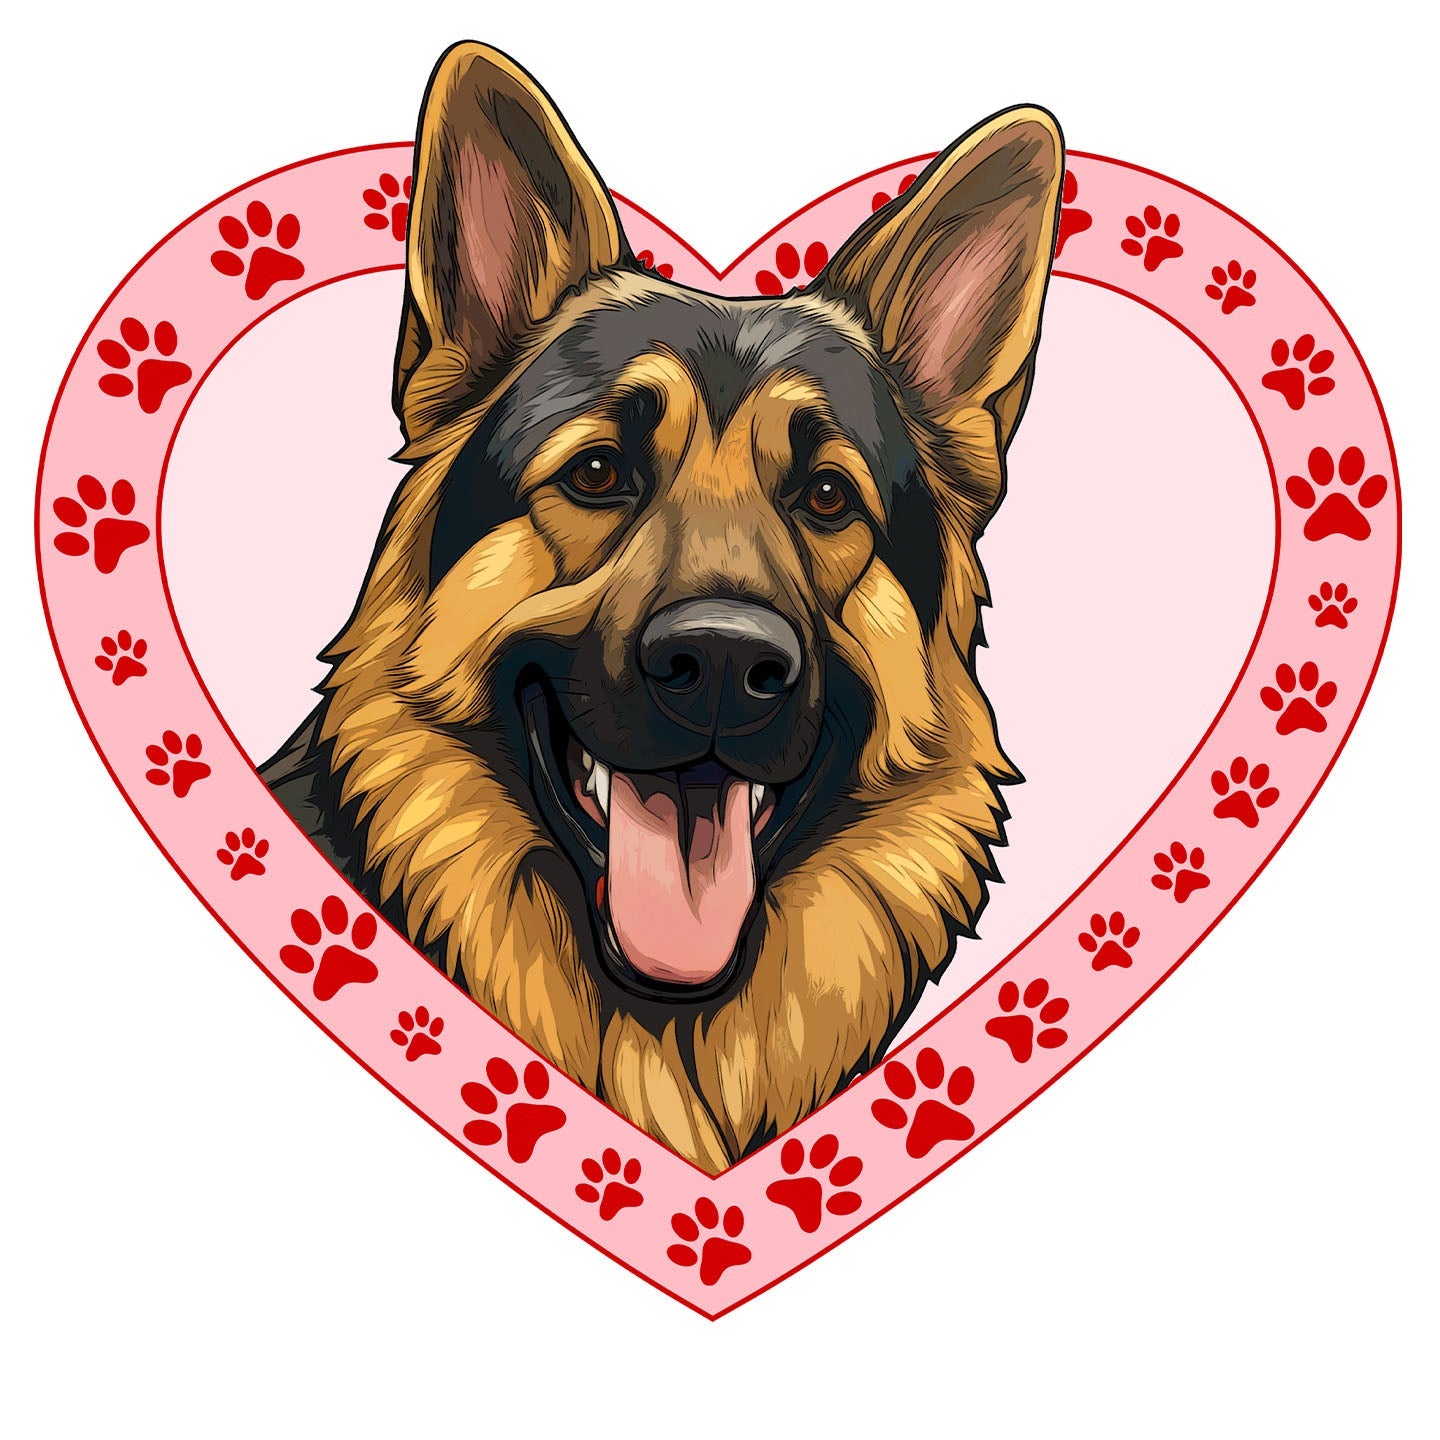 German Shepherd Dog Illustration In Heart - Adult Unisex T-Shirt